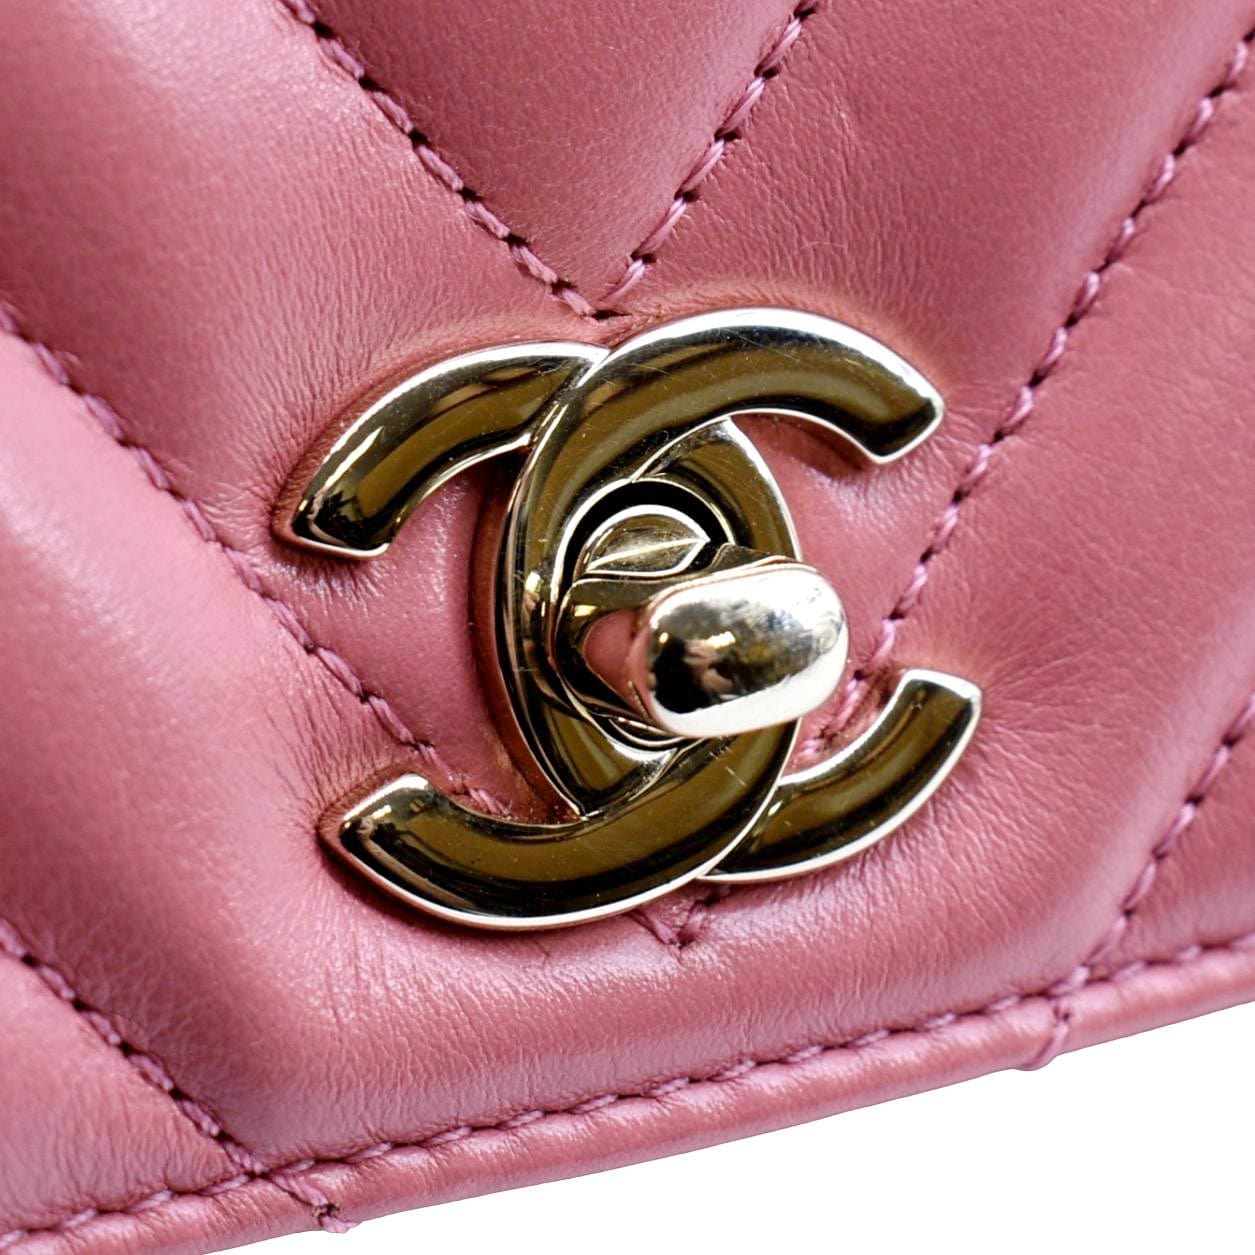 Chanel Pink Chevron Lambskin Classic Square Flap Mini